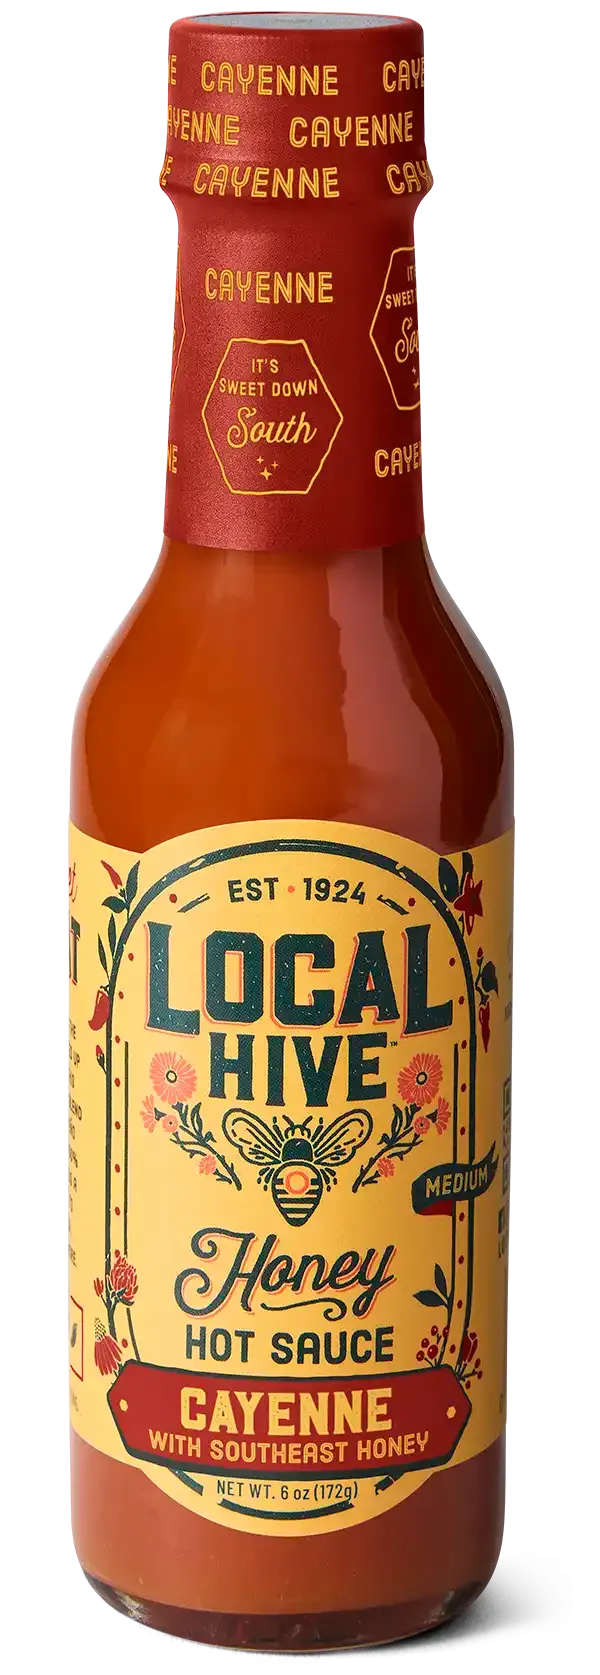 Local Hive Cayenne Honey Hot Sauce bottle